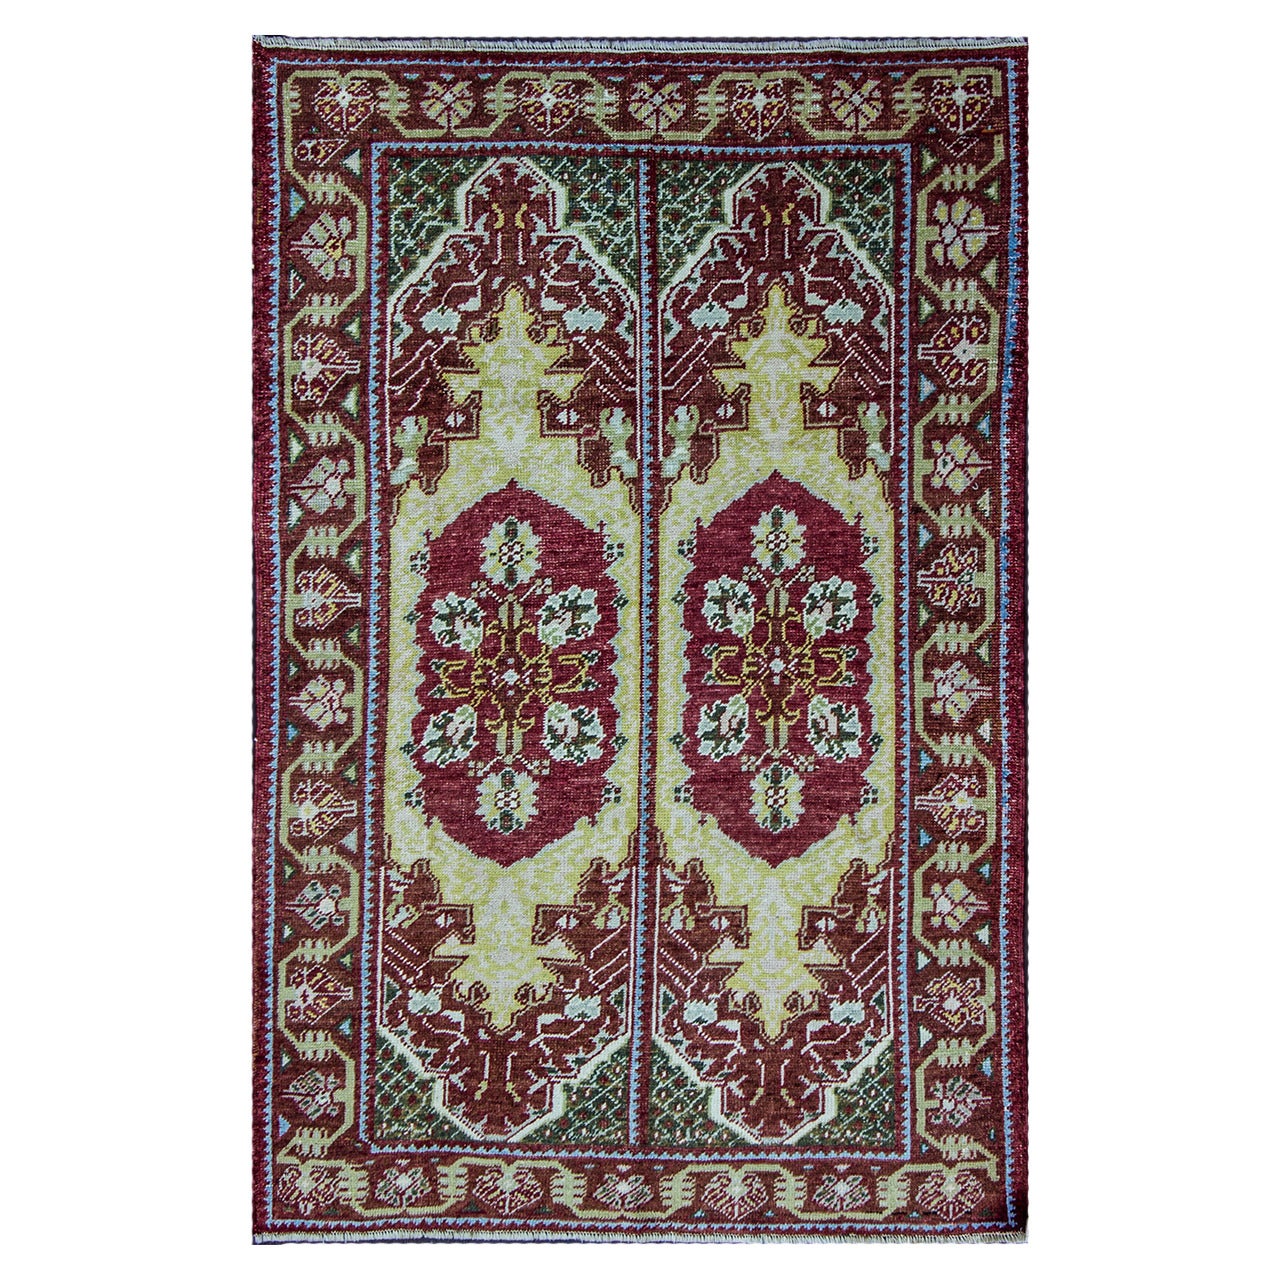 Antique Turkish Ushak Handmade Oriental Rug, 4'5" x 7' Free Shipping